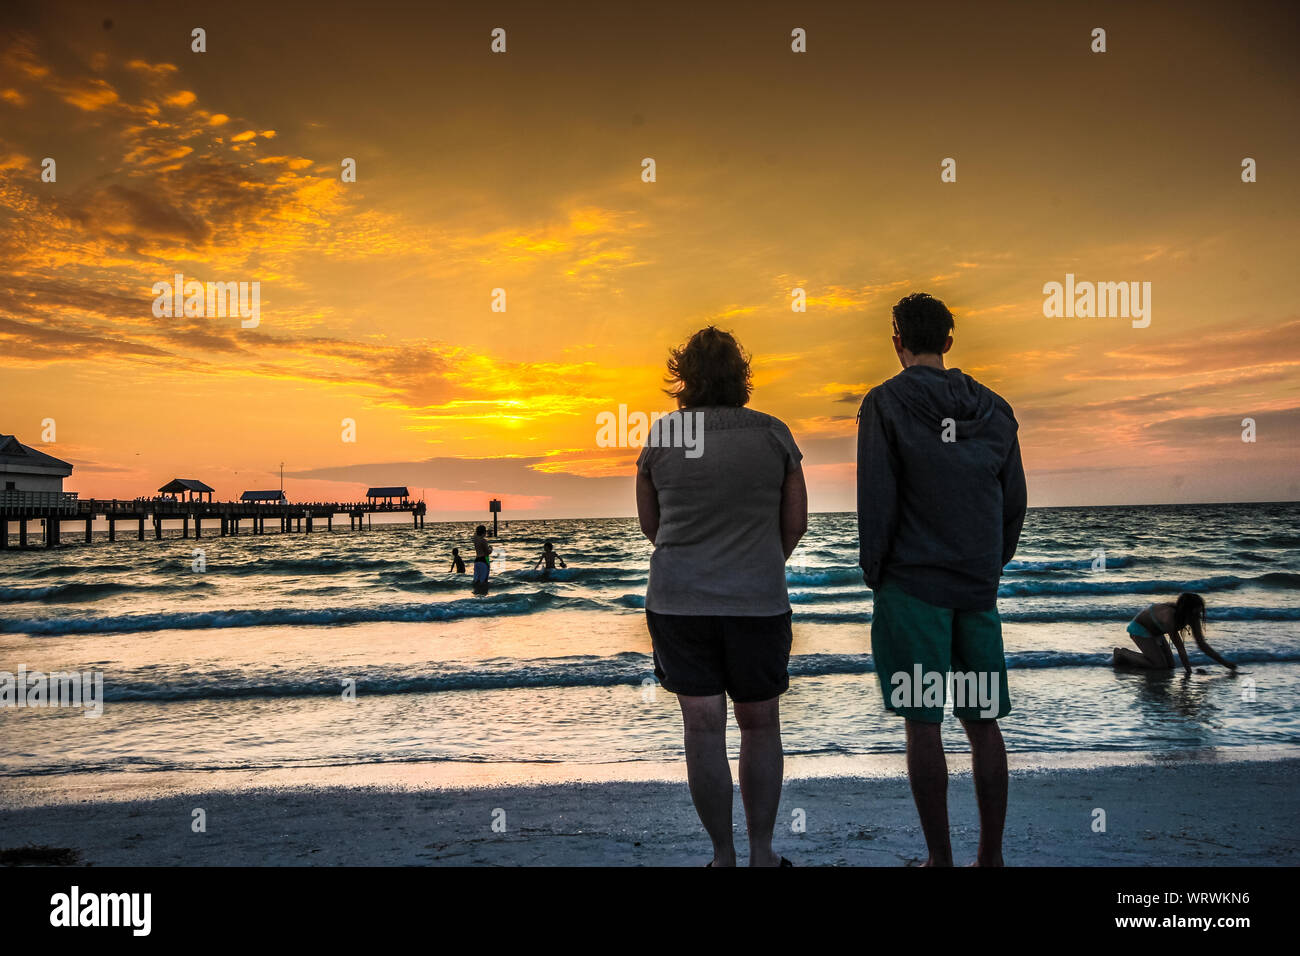 American looking seniors enjoying sunset on the beach - Senior lifestyle Stock Photo